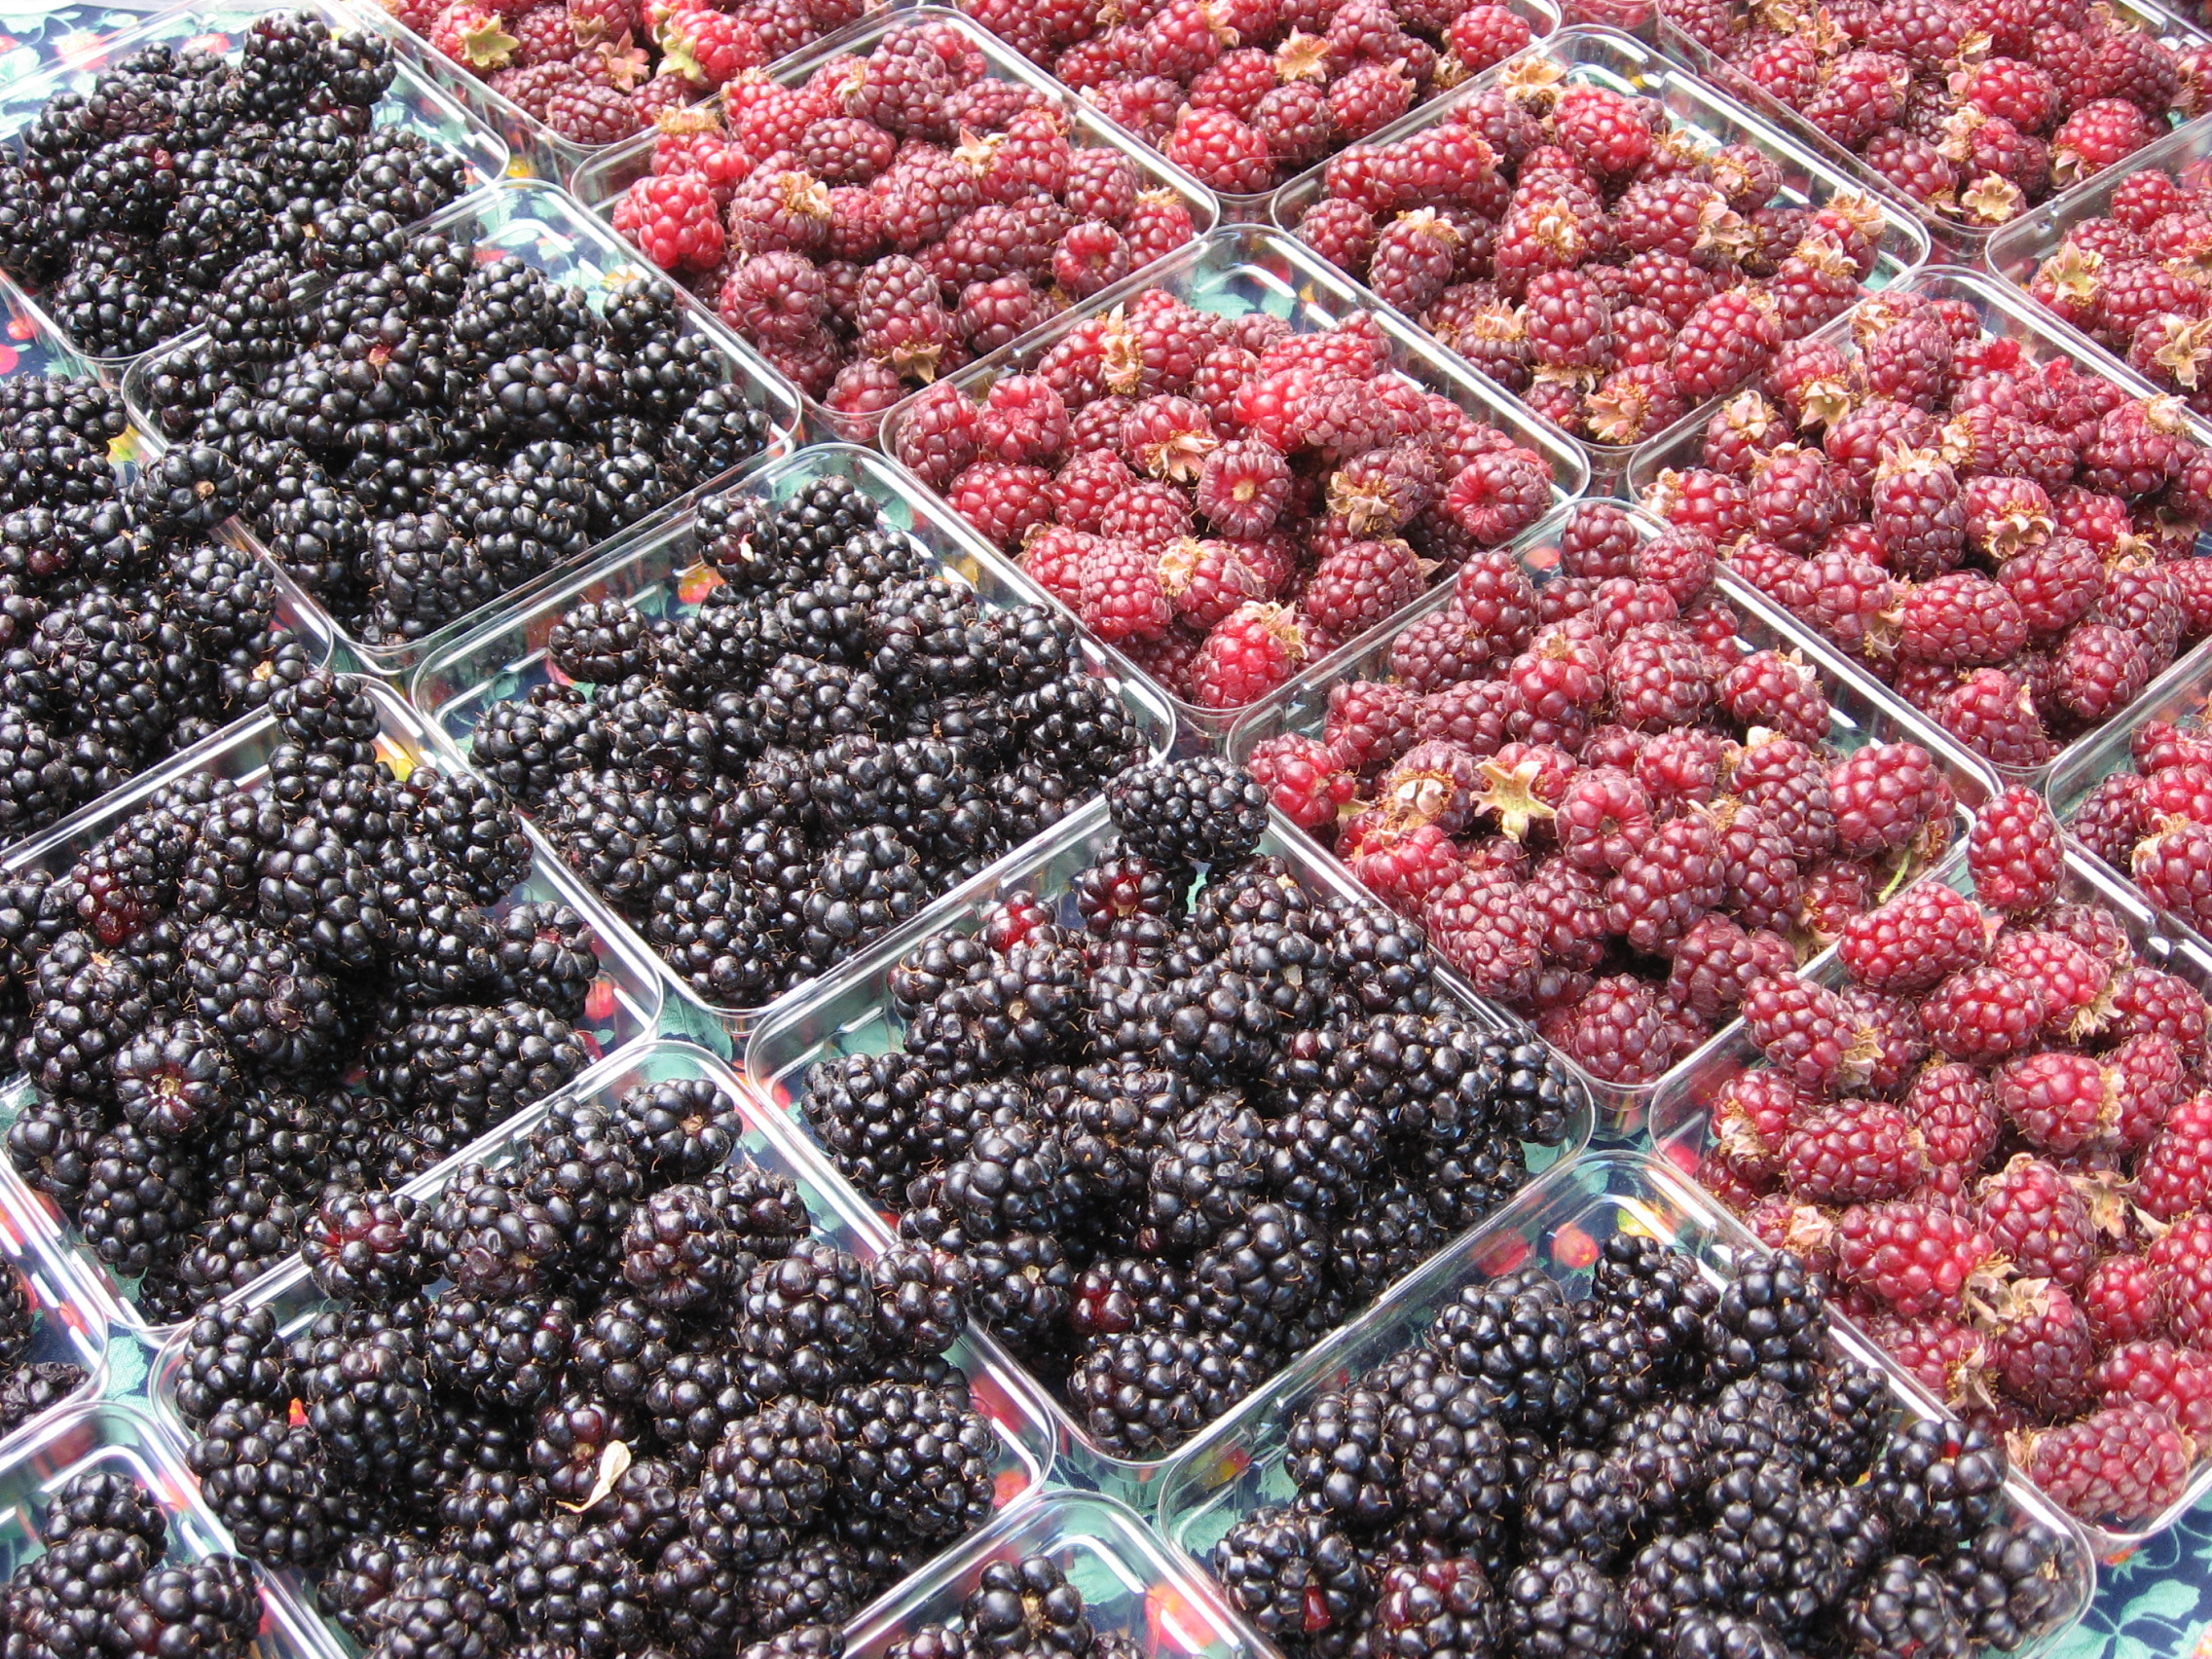 fresh berries at Farmer's Market